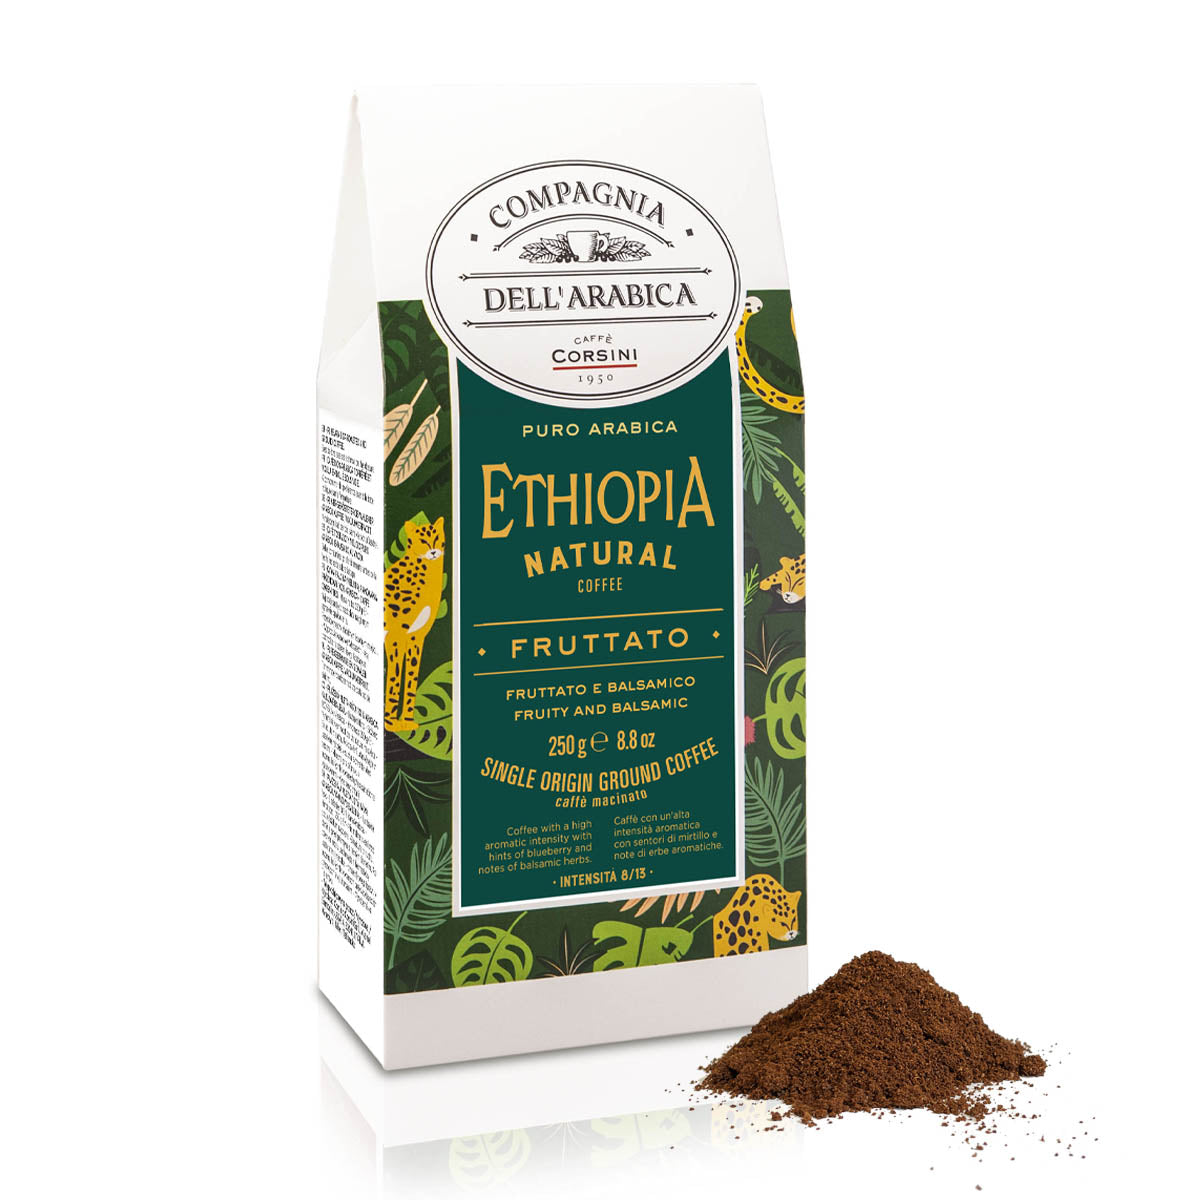 Ground coffee | Ethiopia Natural Coffee | 100% Arabica | 250g | Box of 12 packs